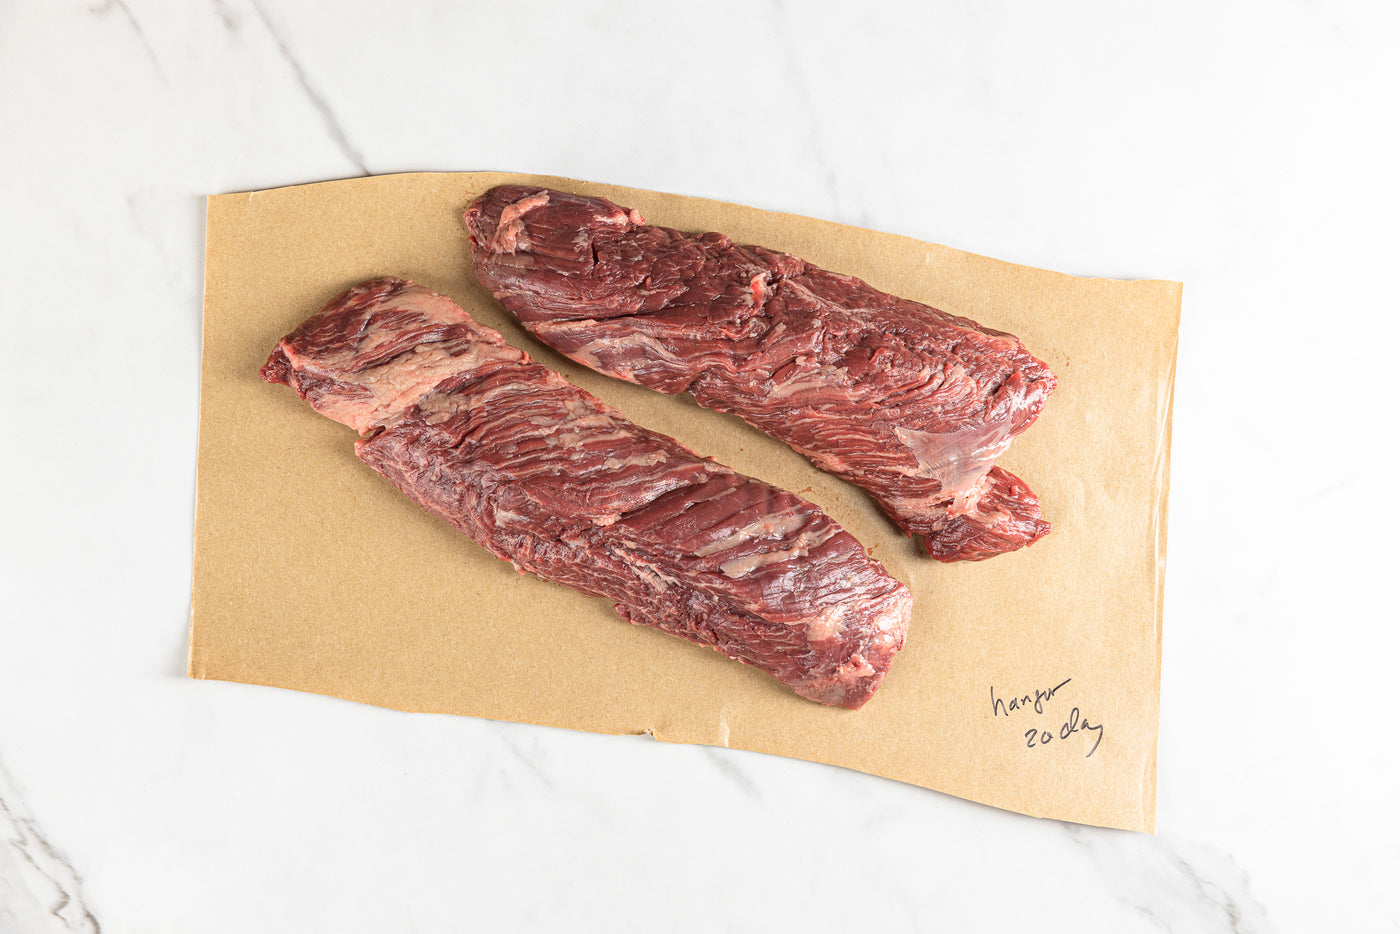 Two hanger steaks on butcher paper